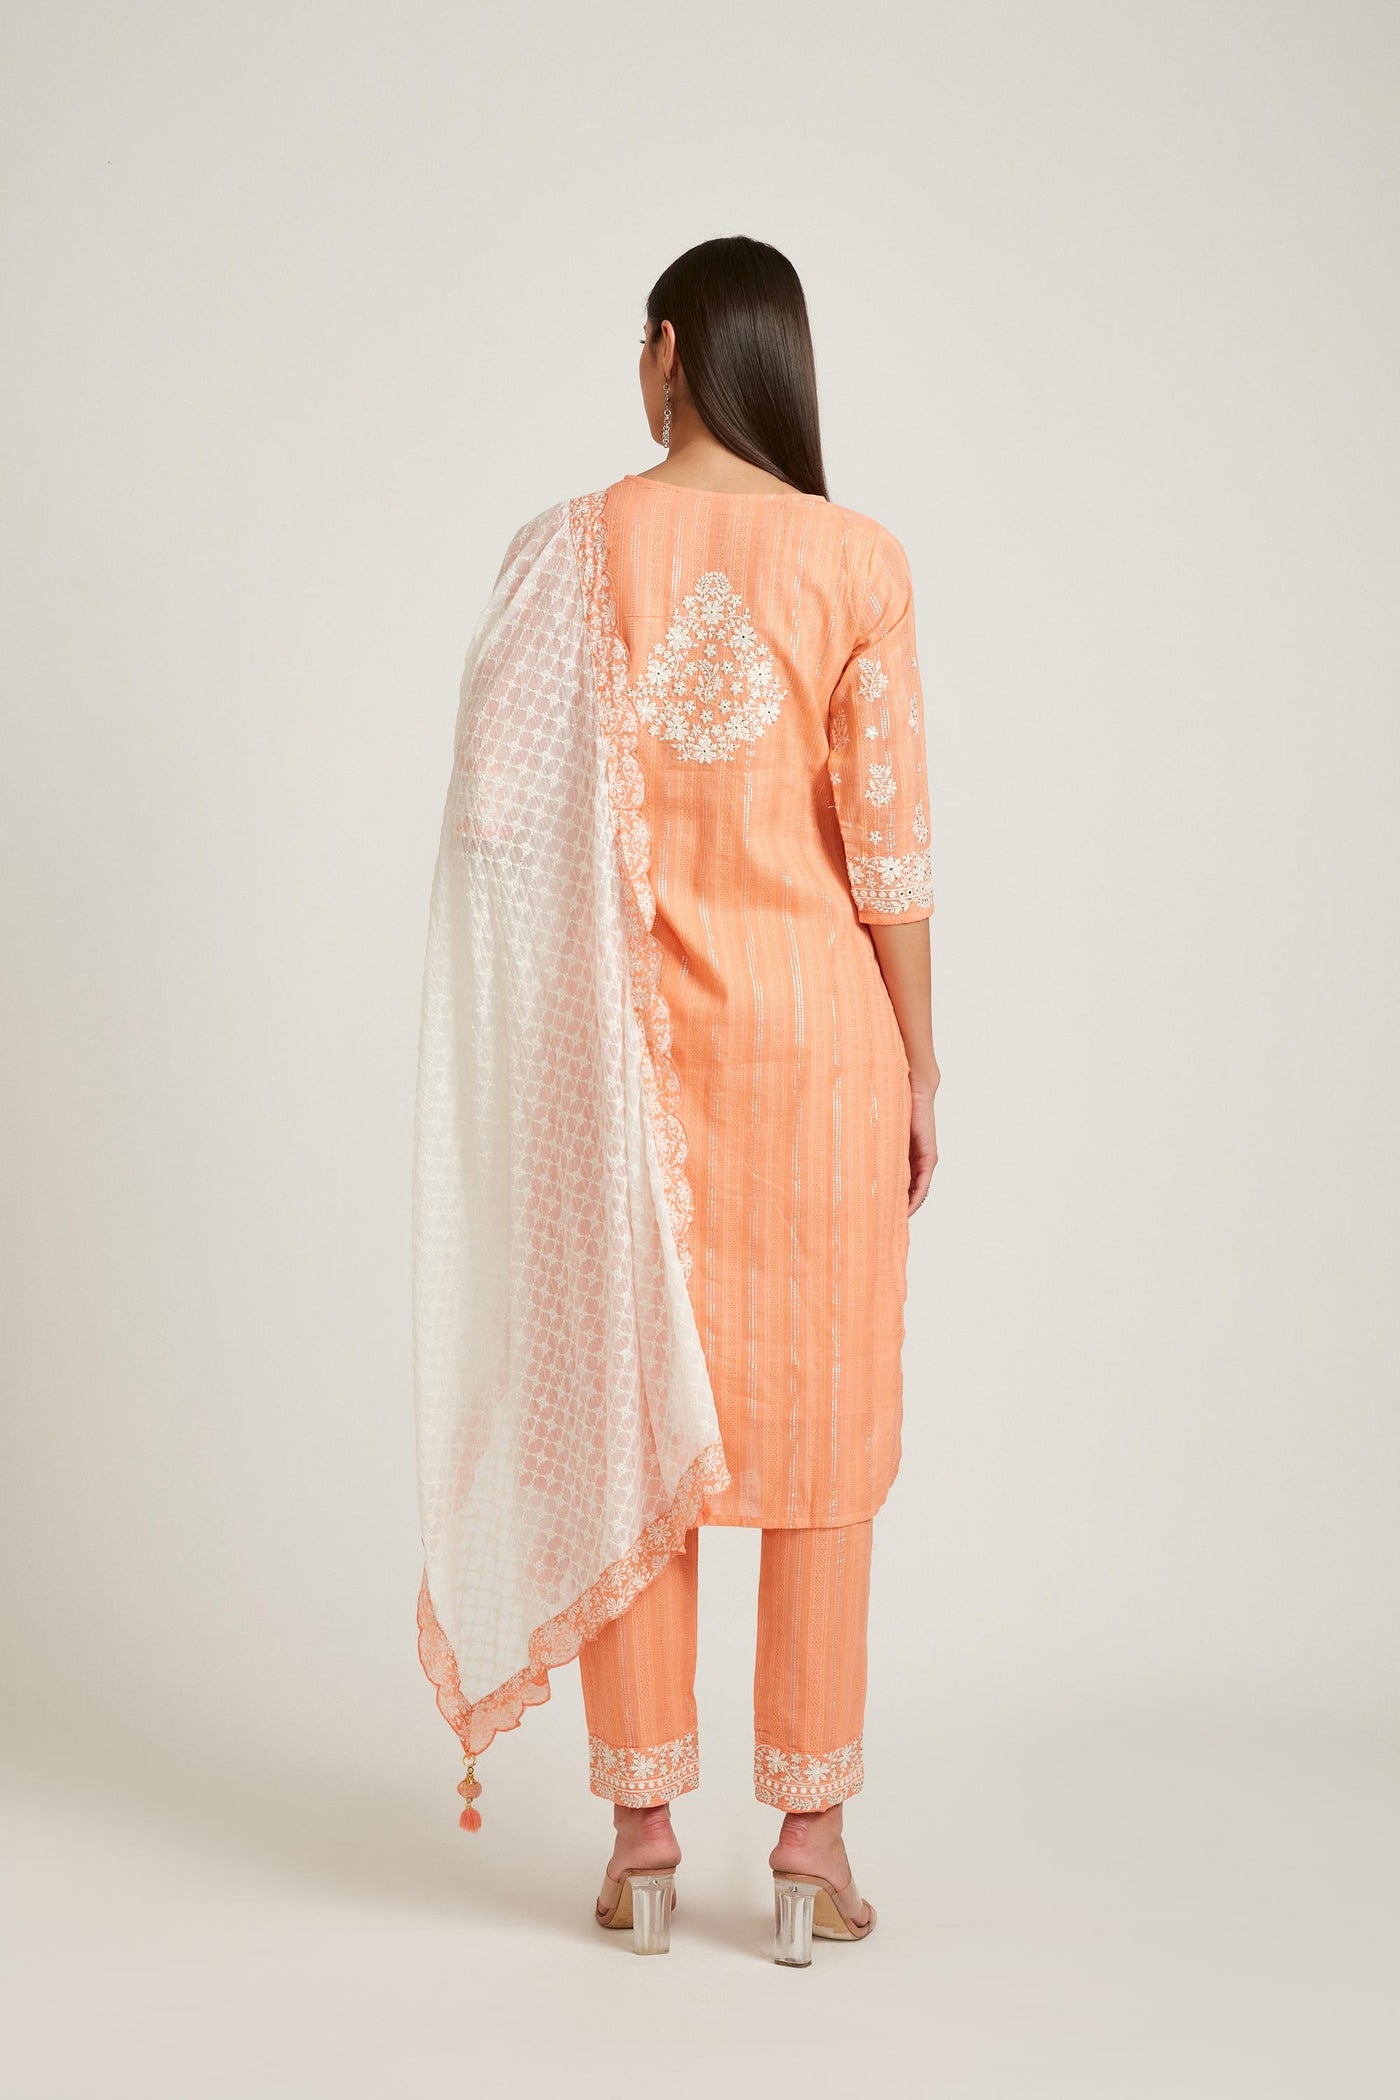 Neeru's Orange Color Cotton Fabric Salwar Kameez